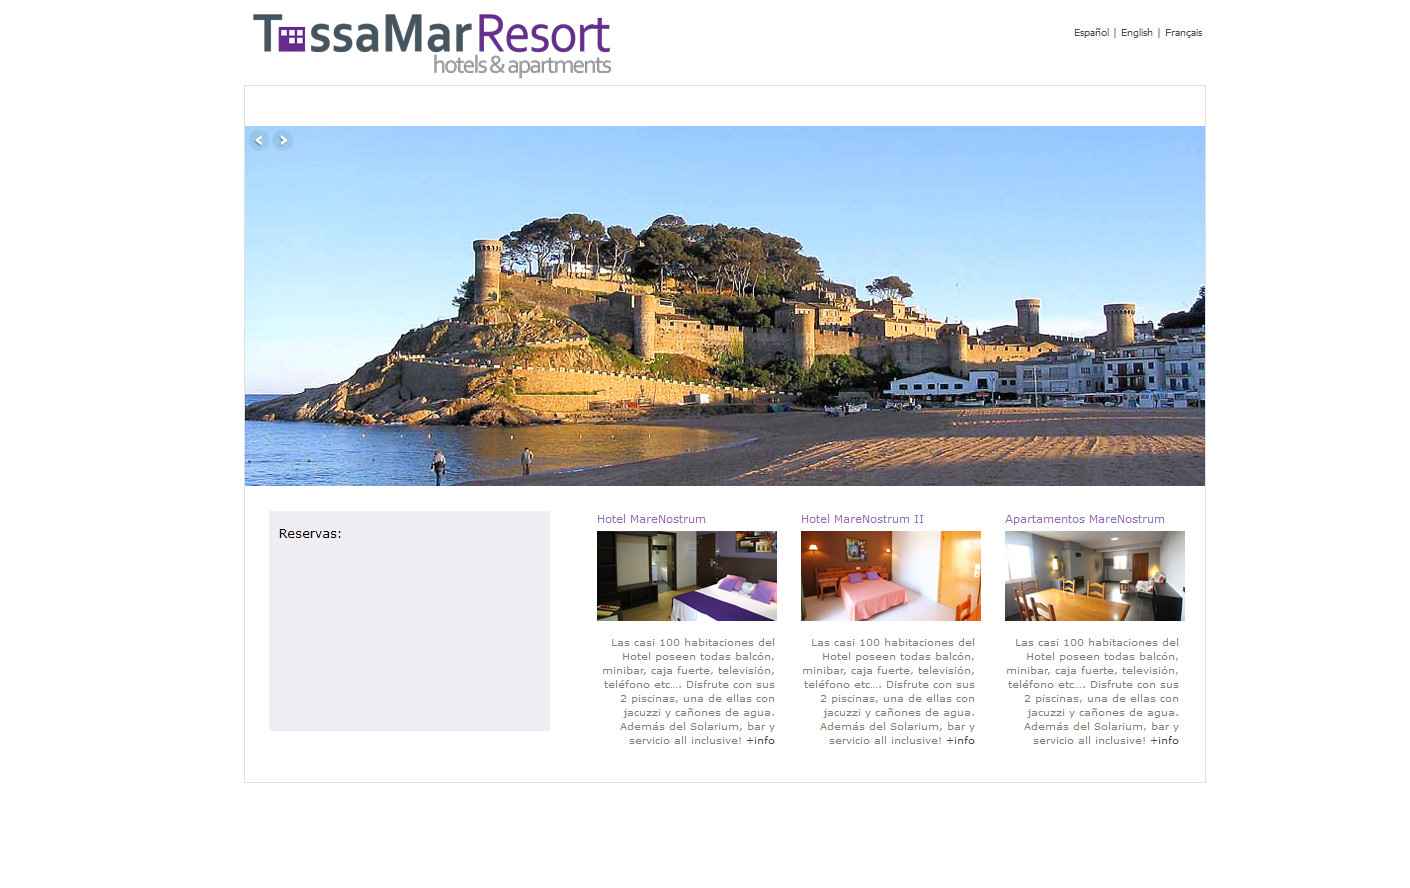 Portfolio of logo and brand design work for hotel and holiday resort - TOSSAMAR RESORT